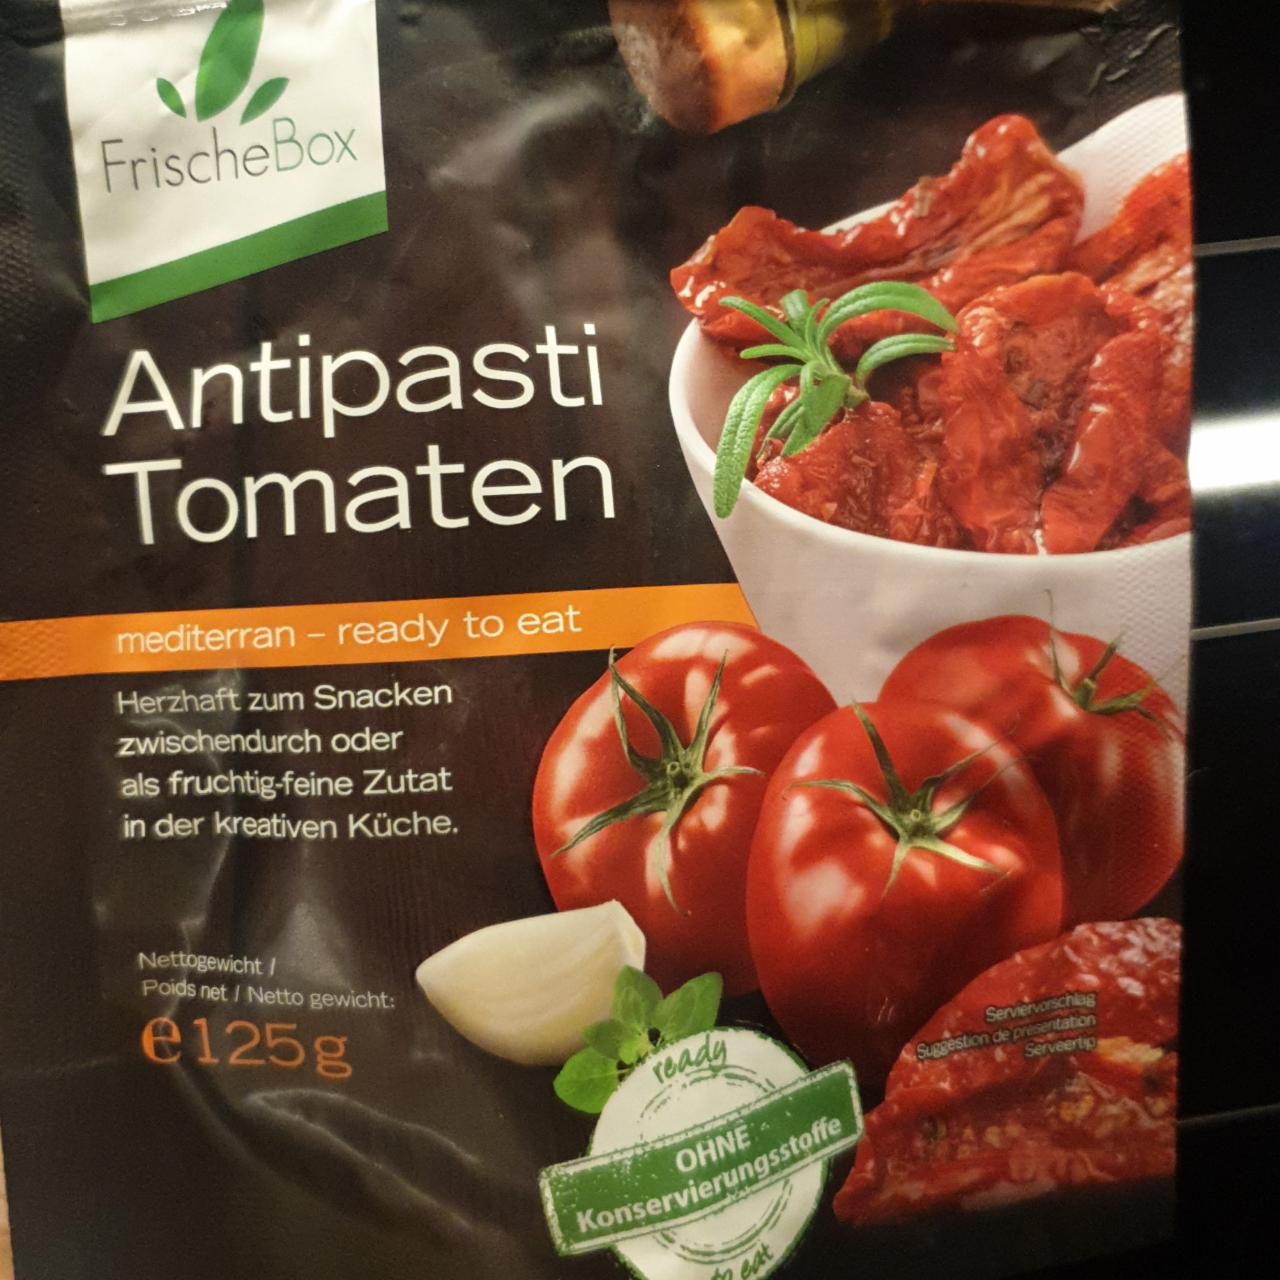 Zdjęcia - Suszone pomidory Antipasti tomaten FrischeBox